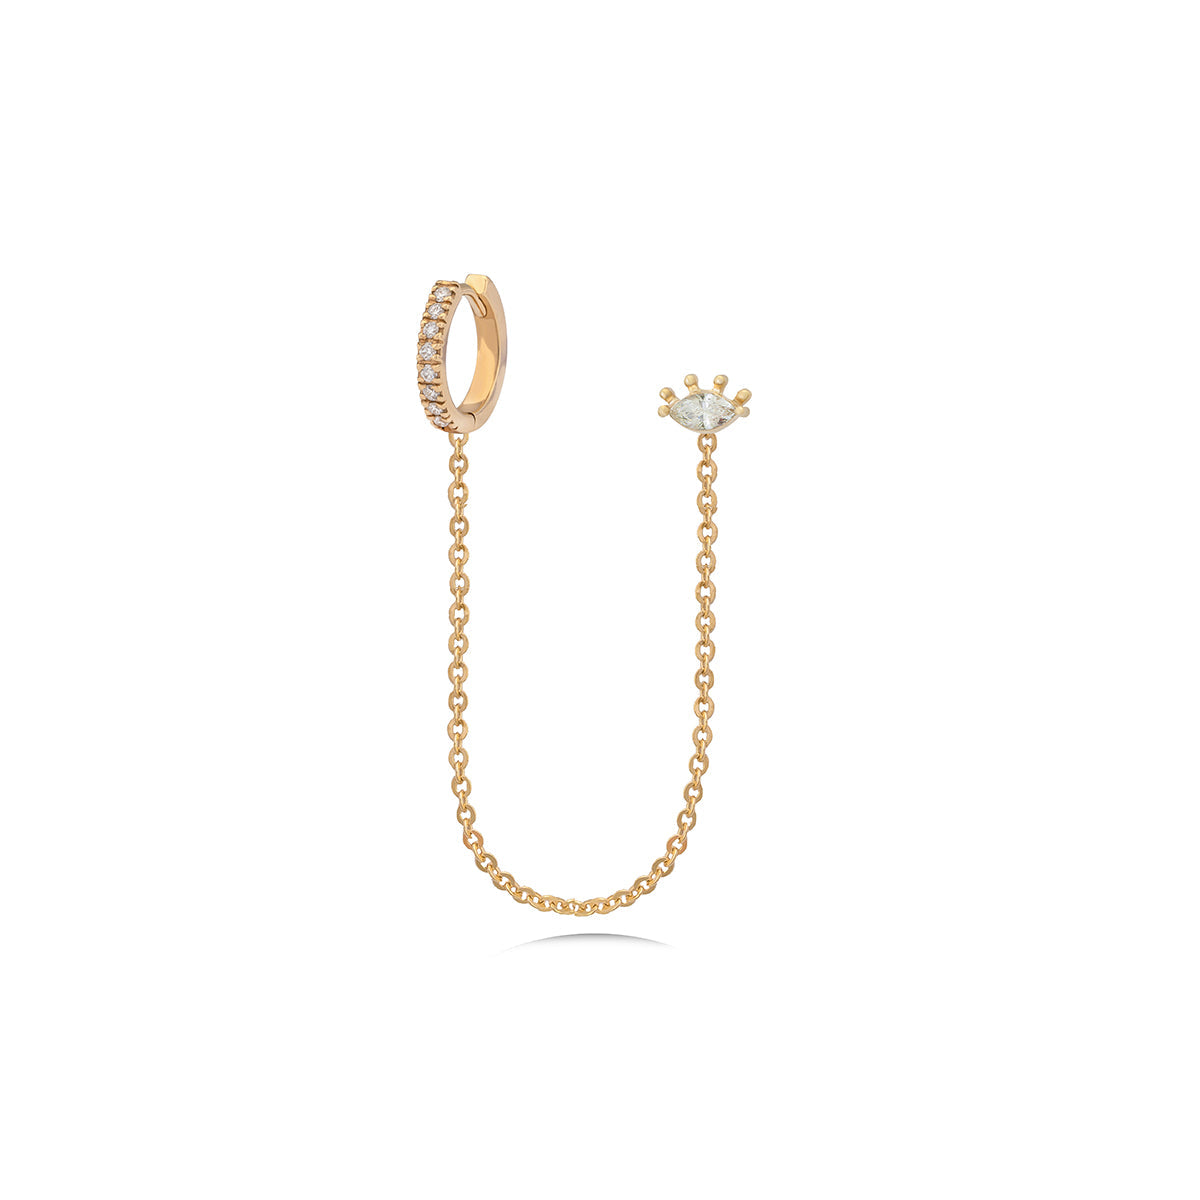 Diamond Chain and Hoops Stud Earrings in 18k Gold